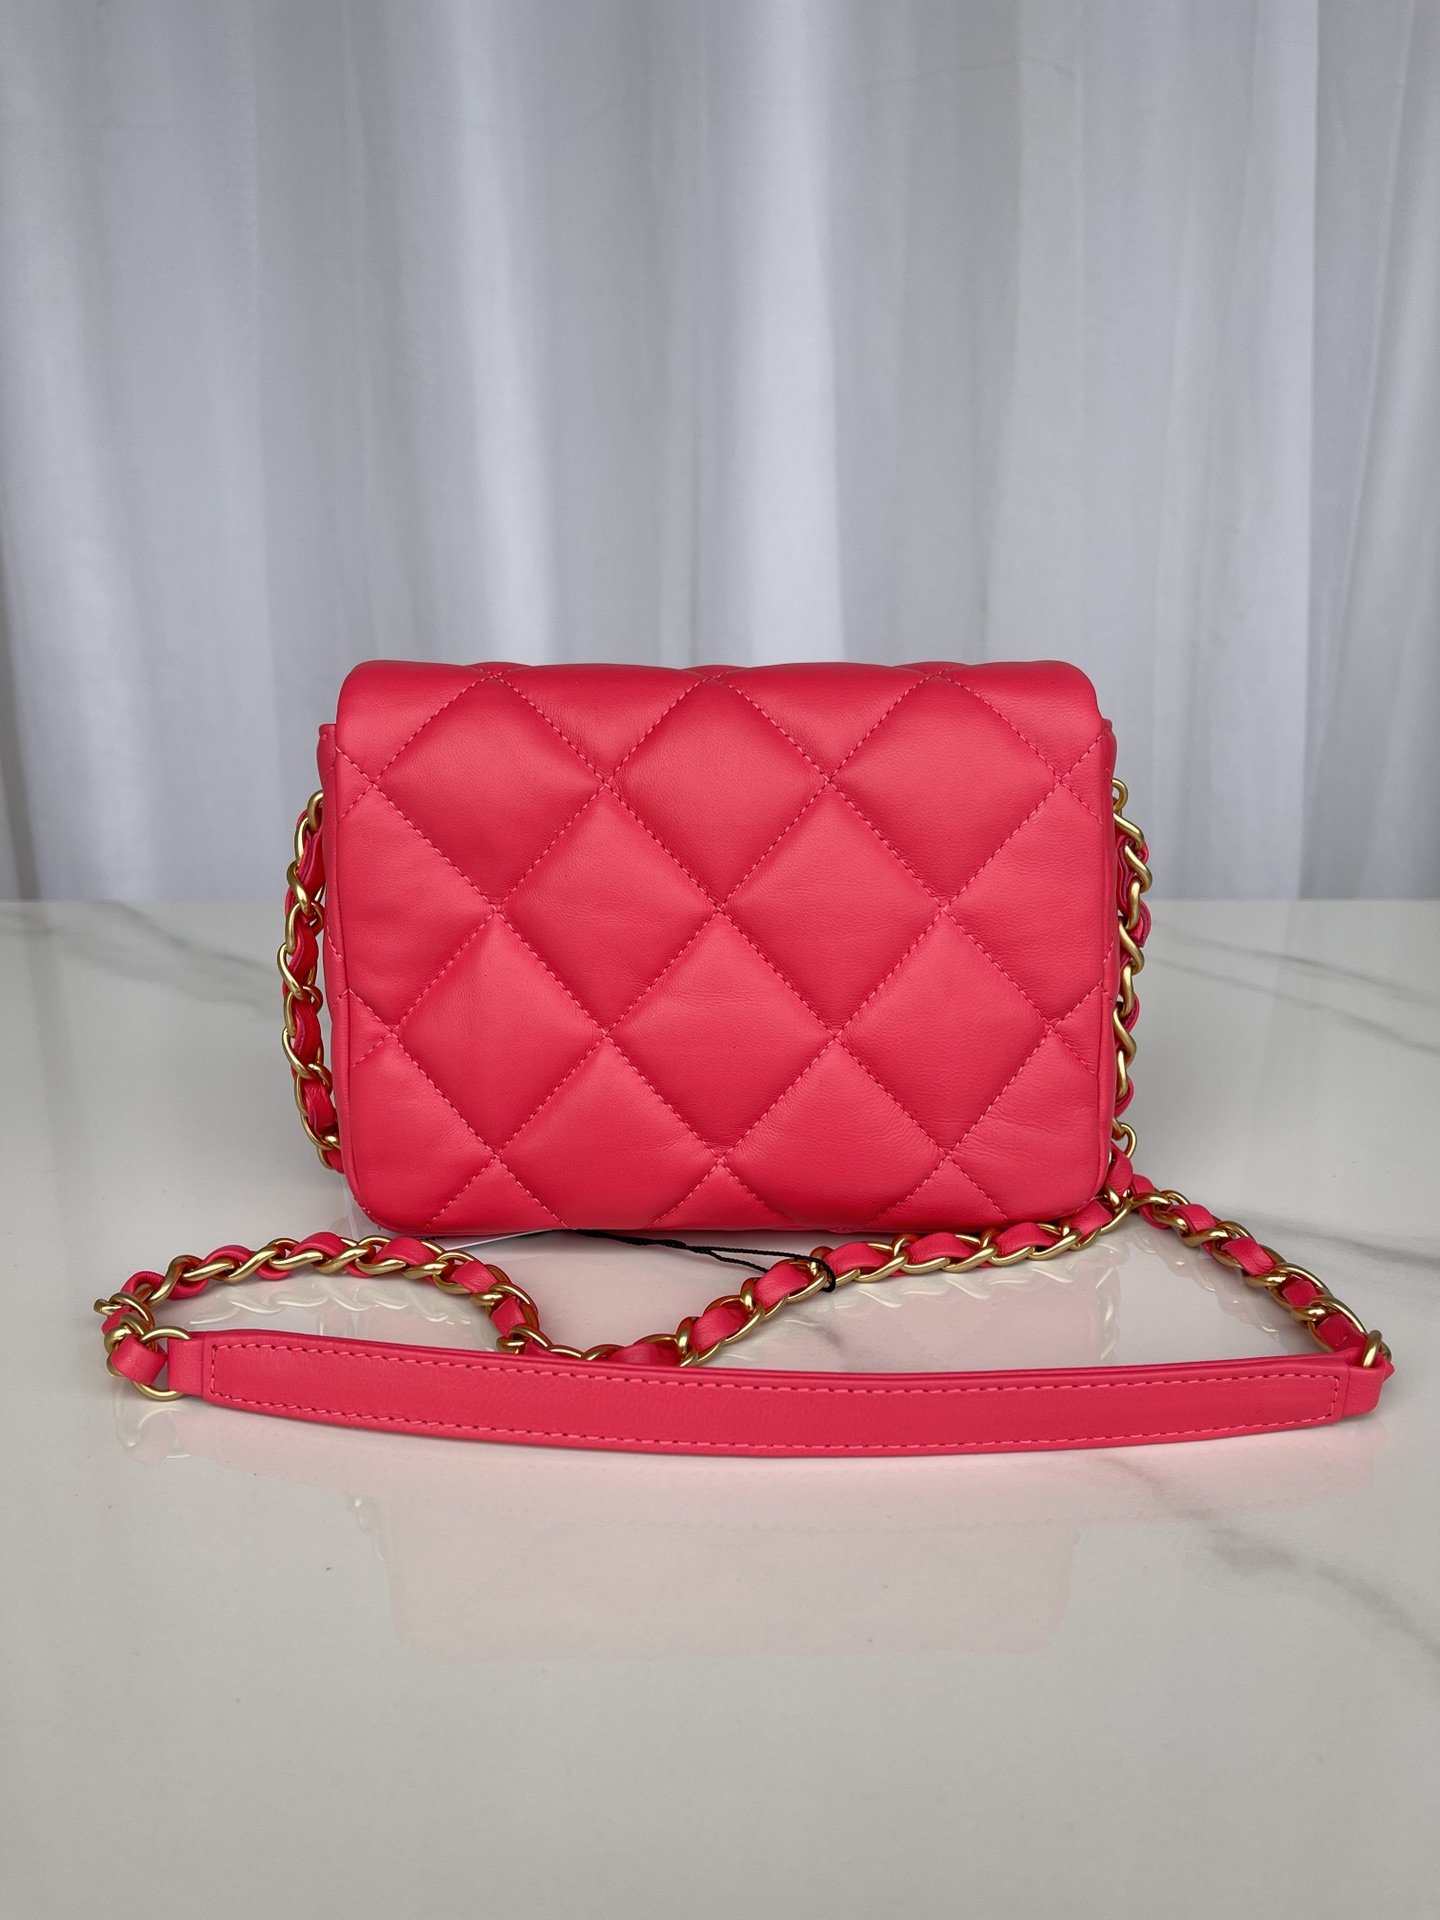 A bag Mini Flap Bag AS3979 18 cm, red фото 3